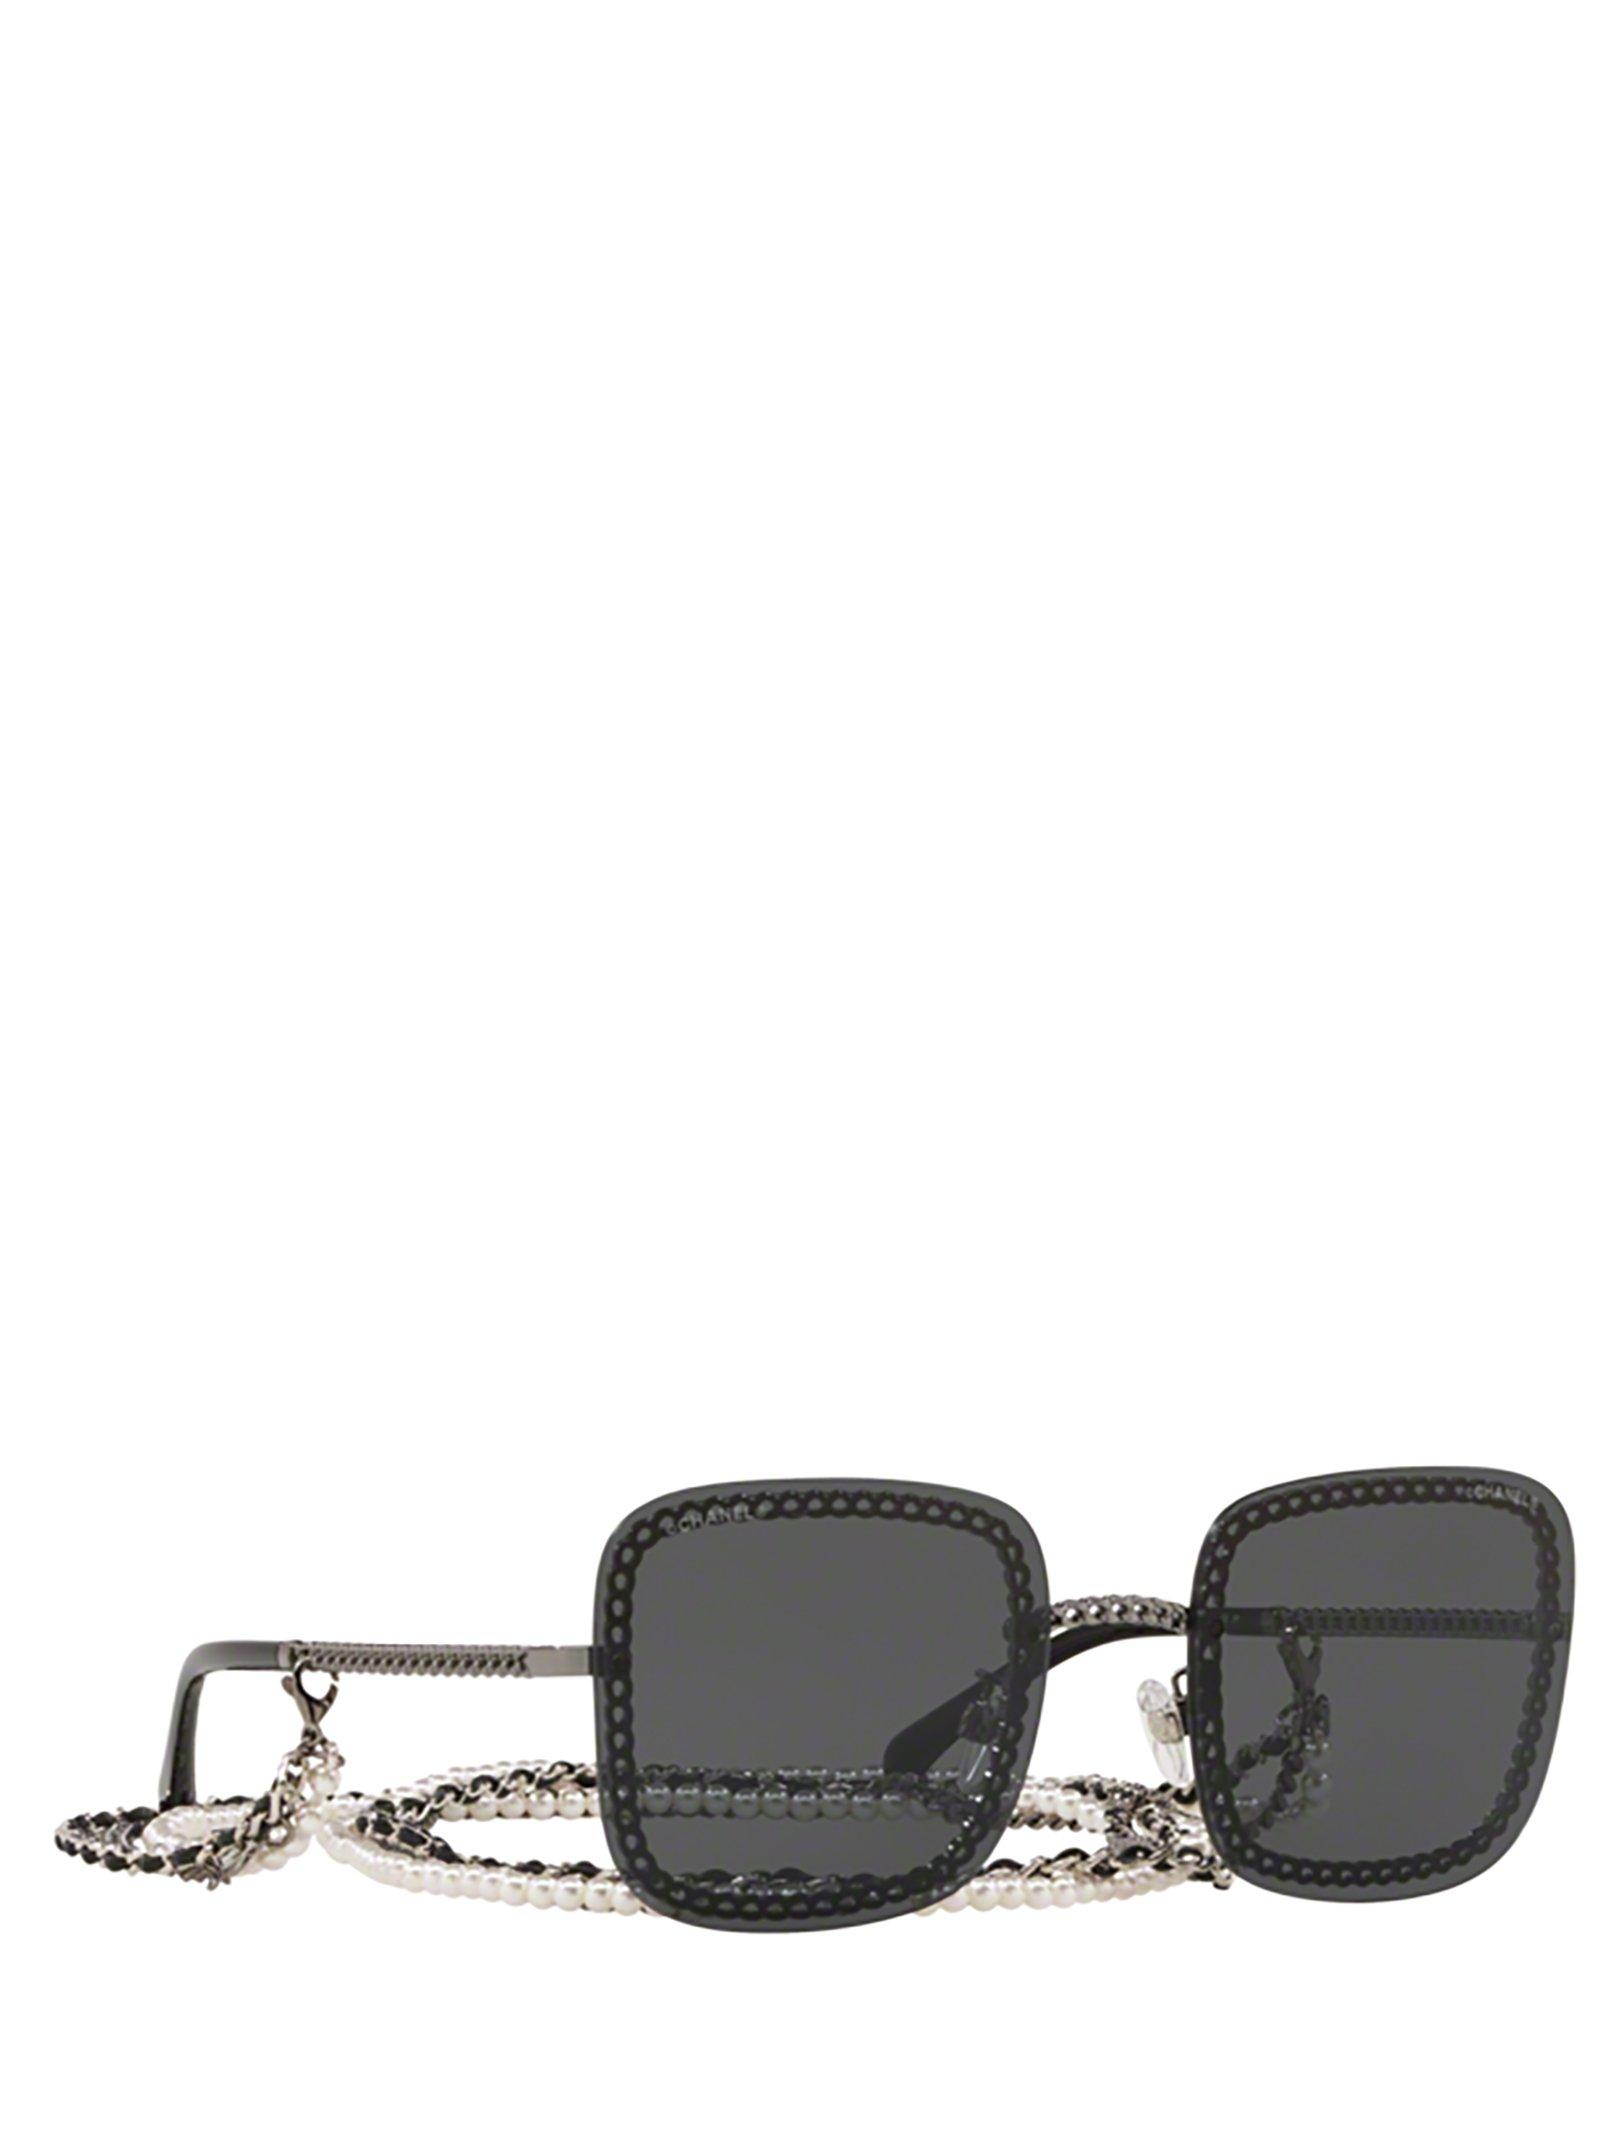 chanel sunglasses on chain